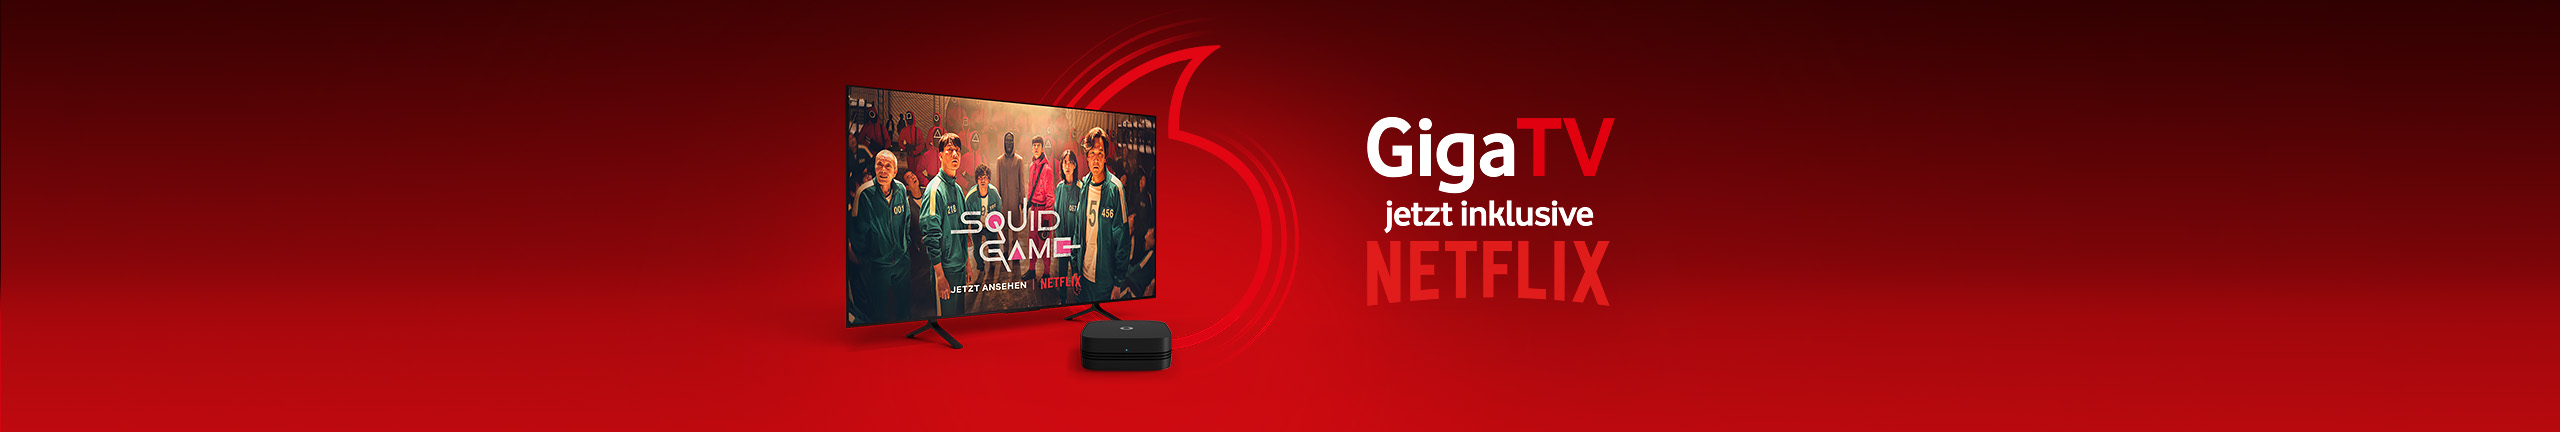 Netflix & GigaTV kombinieren